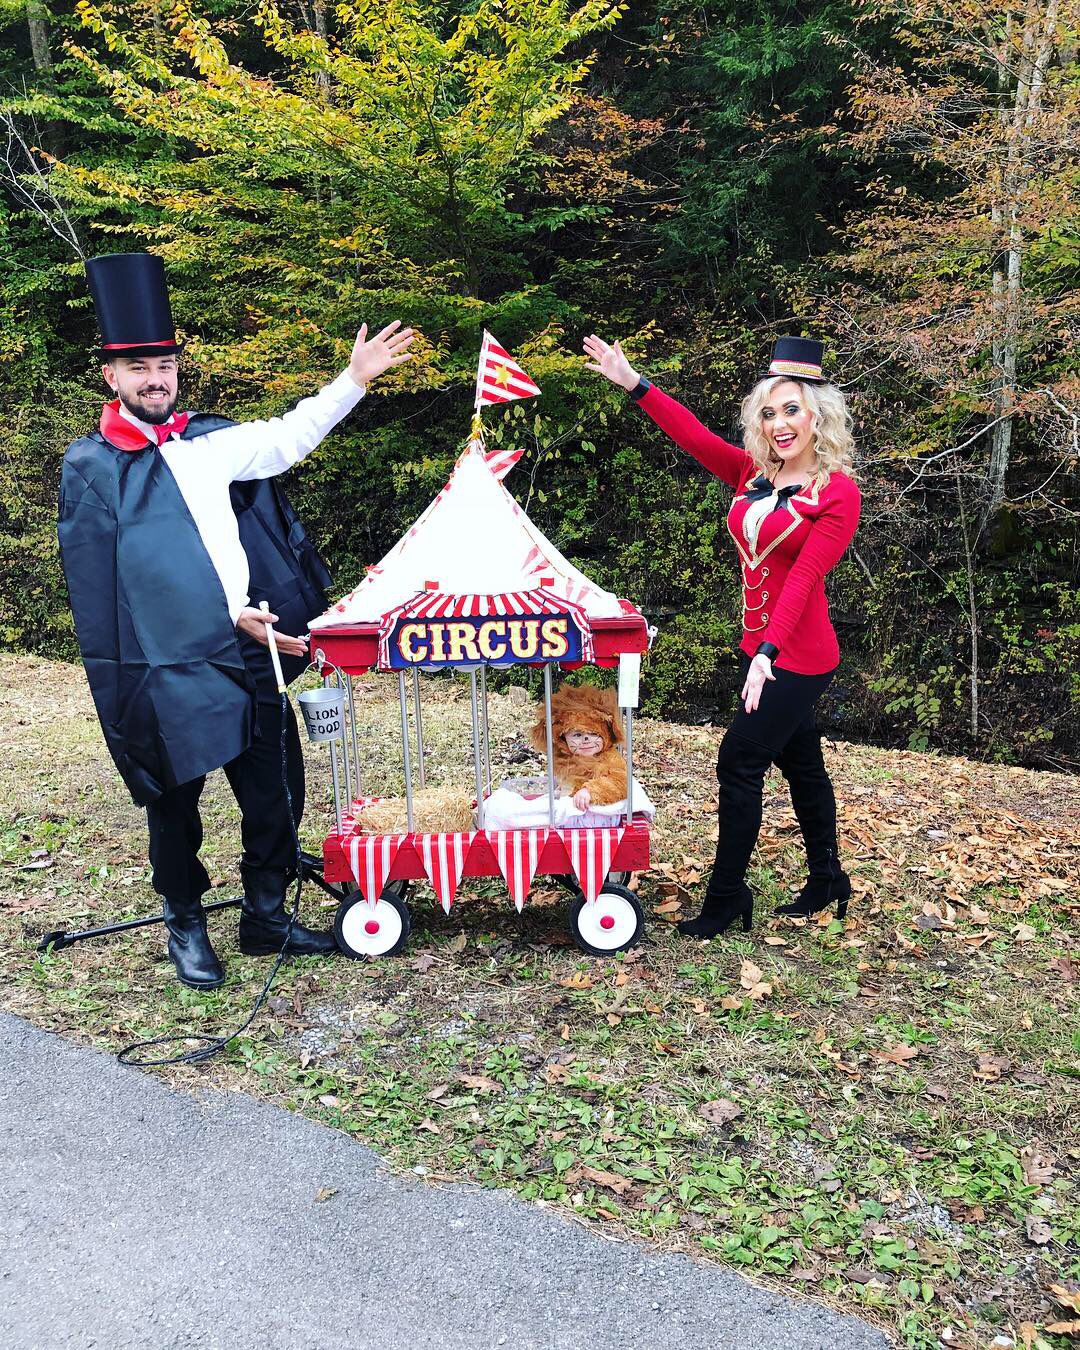 idee costume carnevale bimbo 1 anno circo